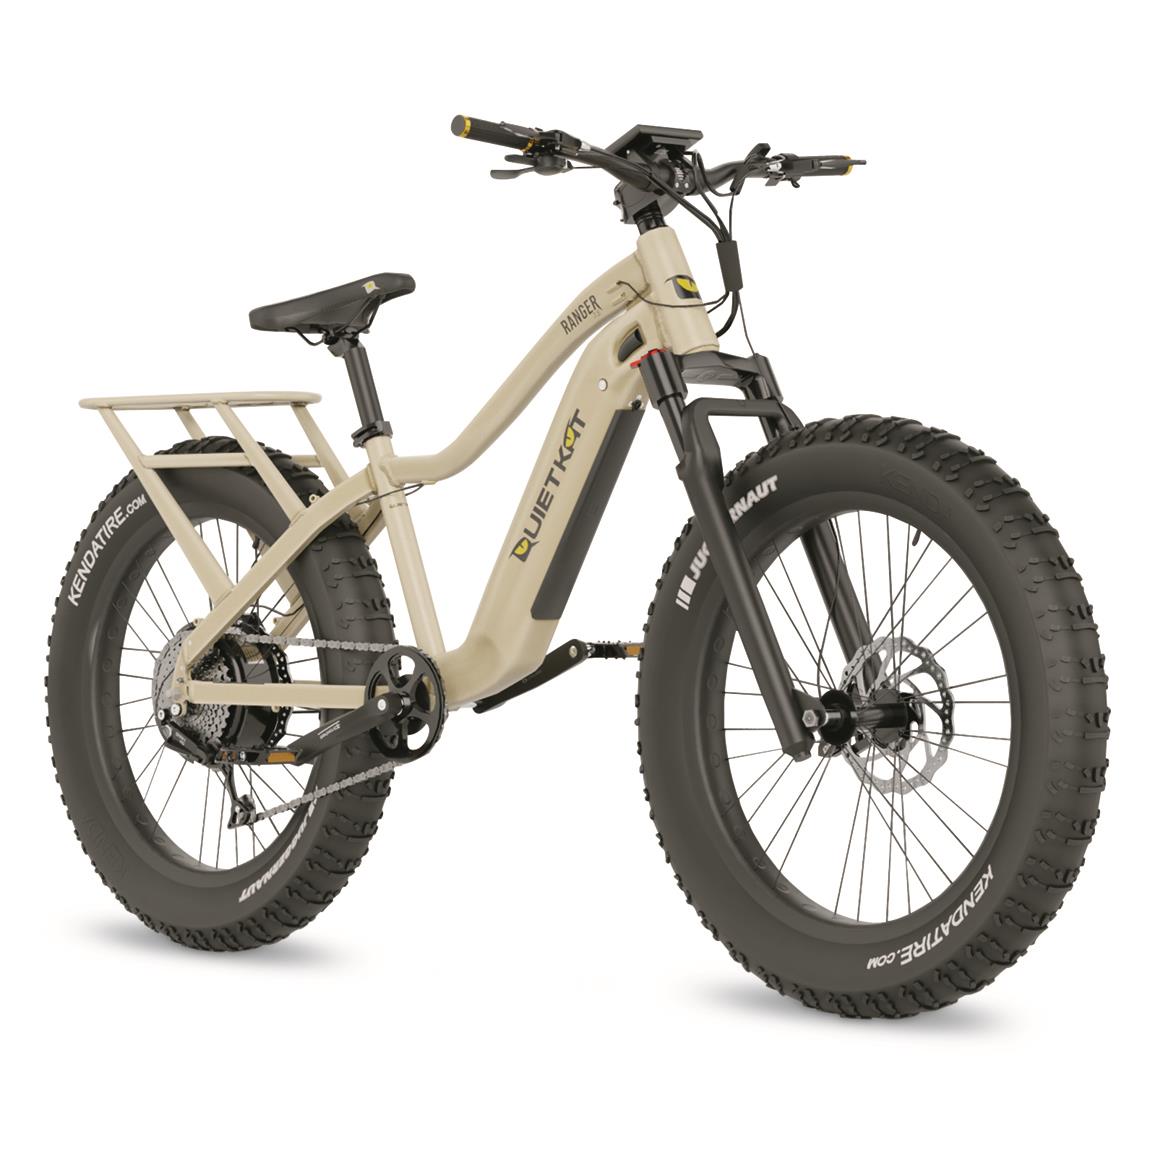 QuietKat Ranger 750 Electric Fat-tire Bike, 2021 Model, Sandstone